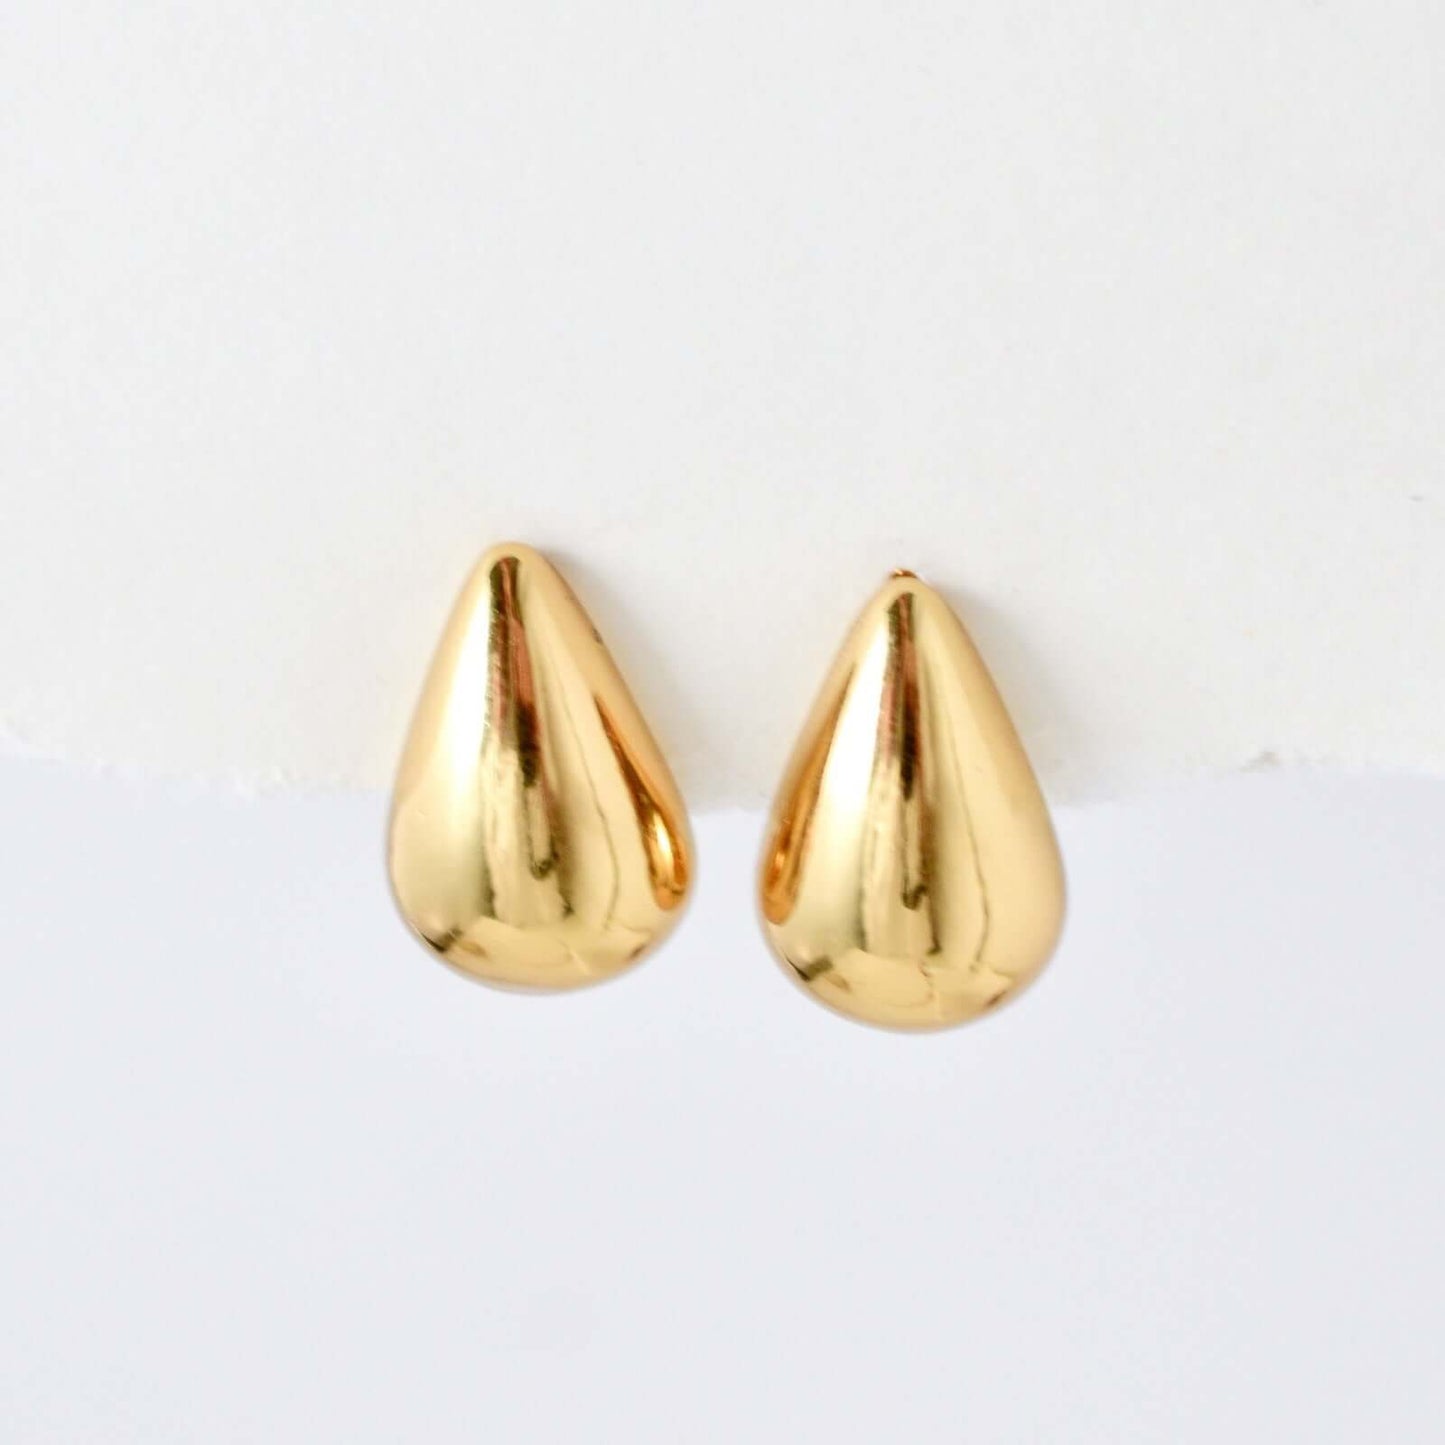 venus stud earrings for women